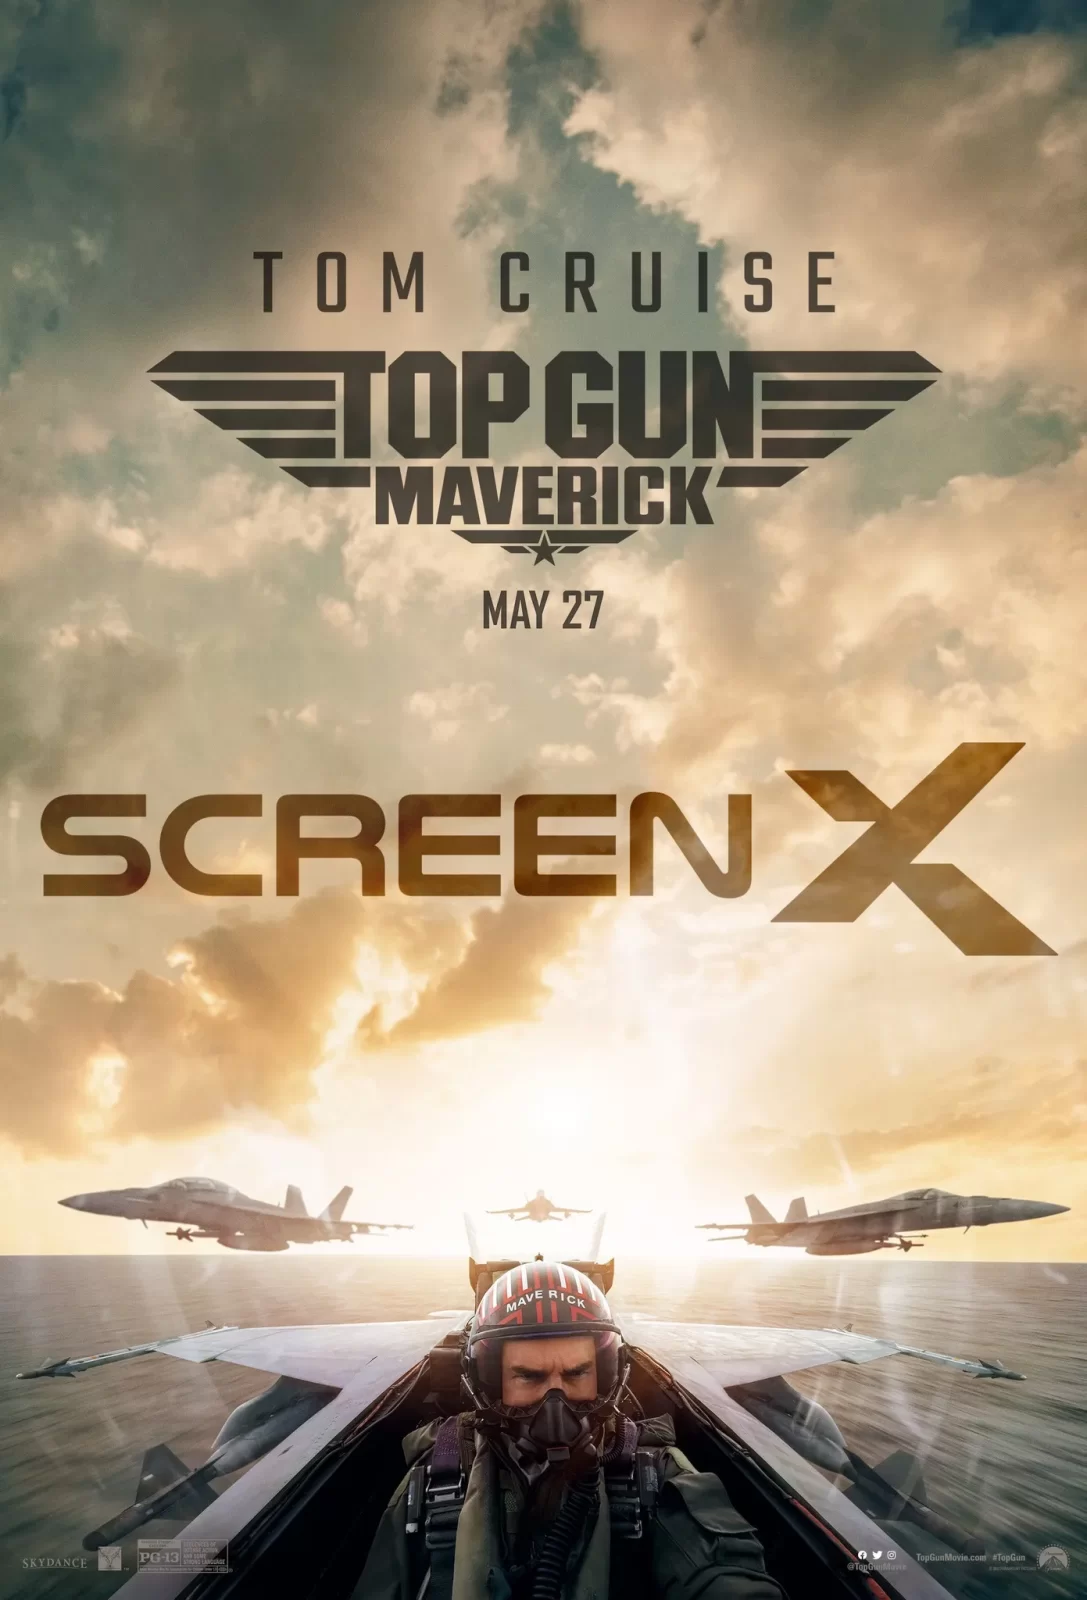 Top Gun: Maverick Poster ScreenX